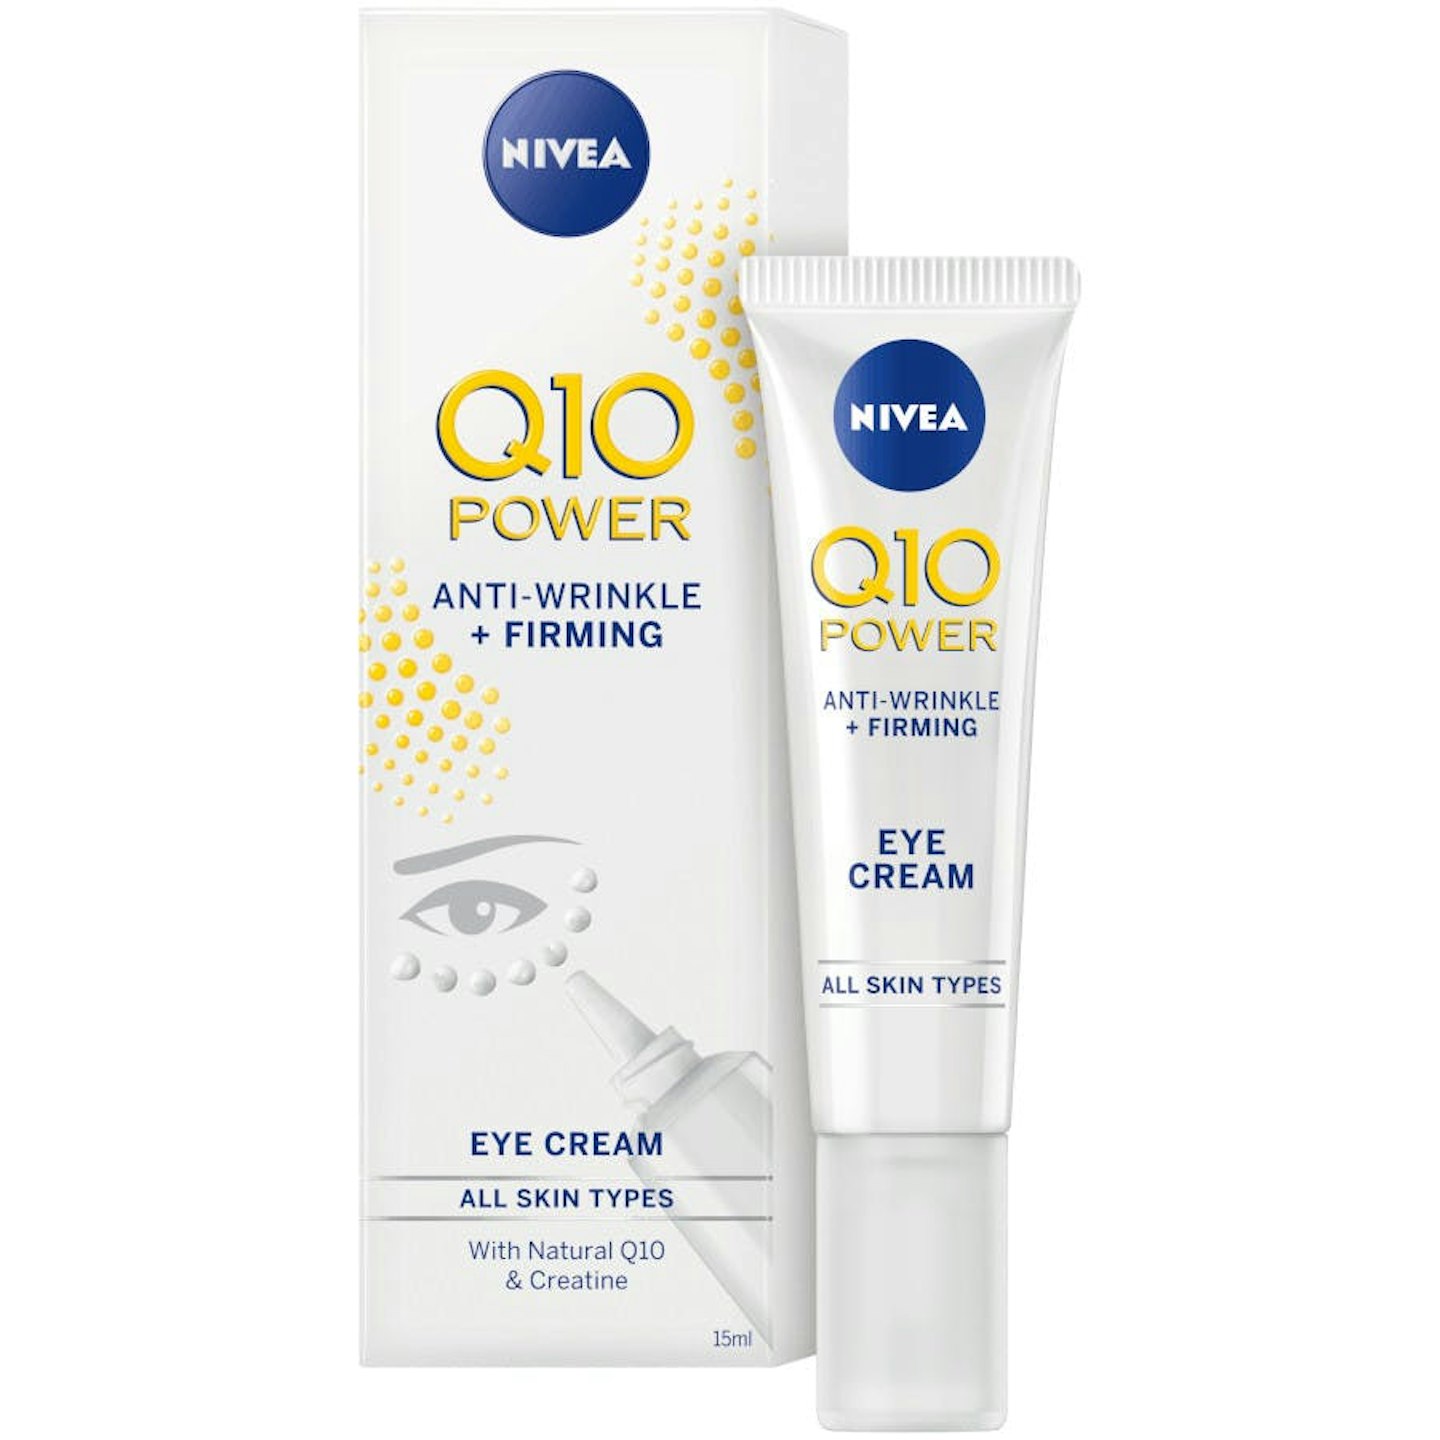 NIVEA Q10 Power Anti-Wrinkle + Firming Eye Cream